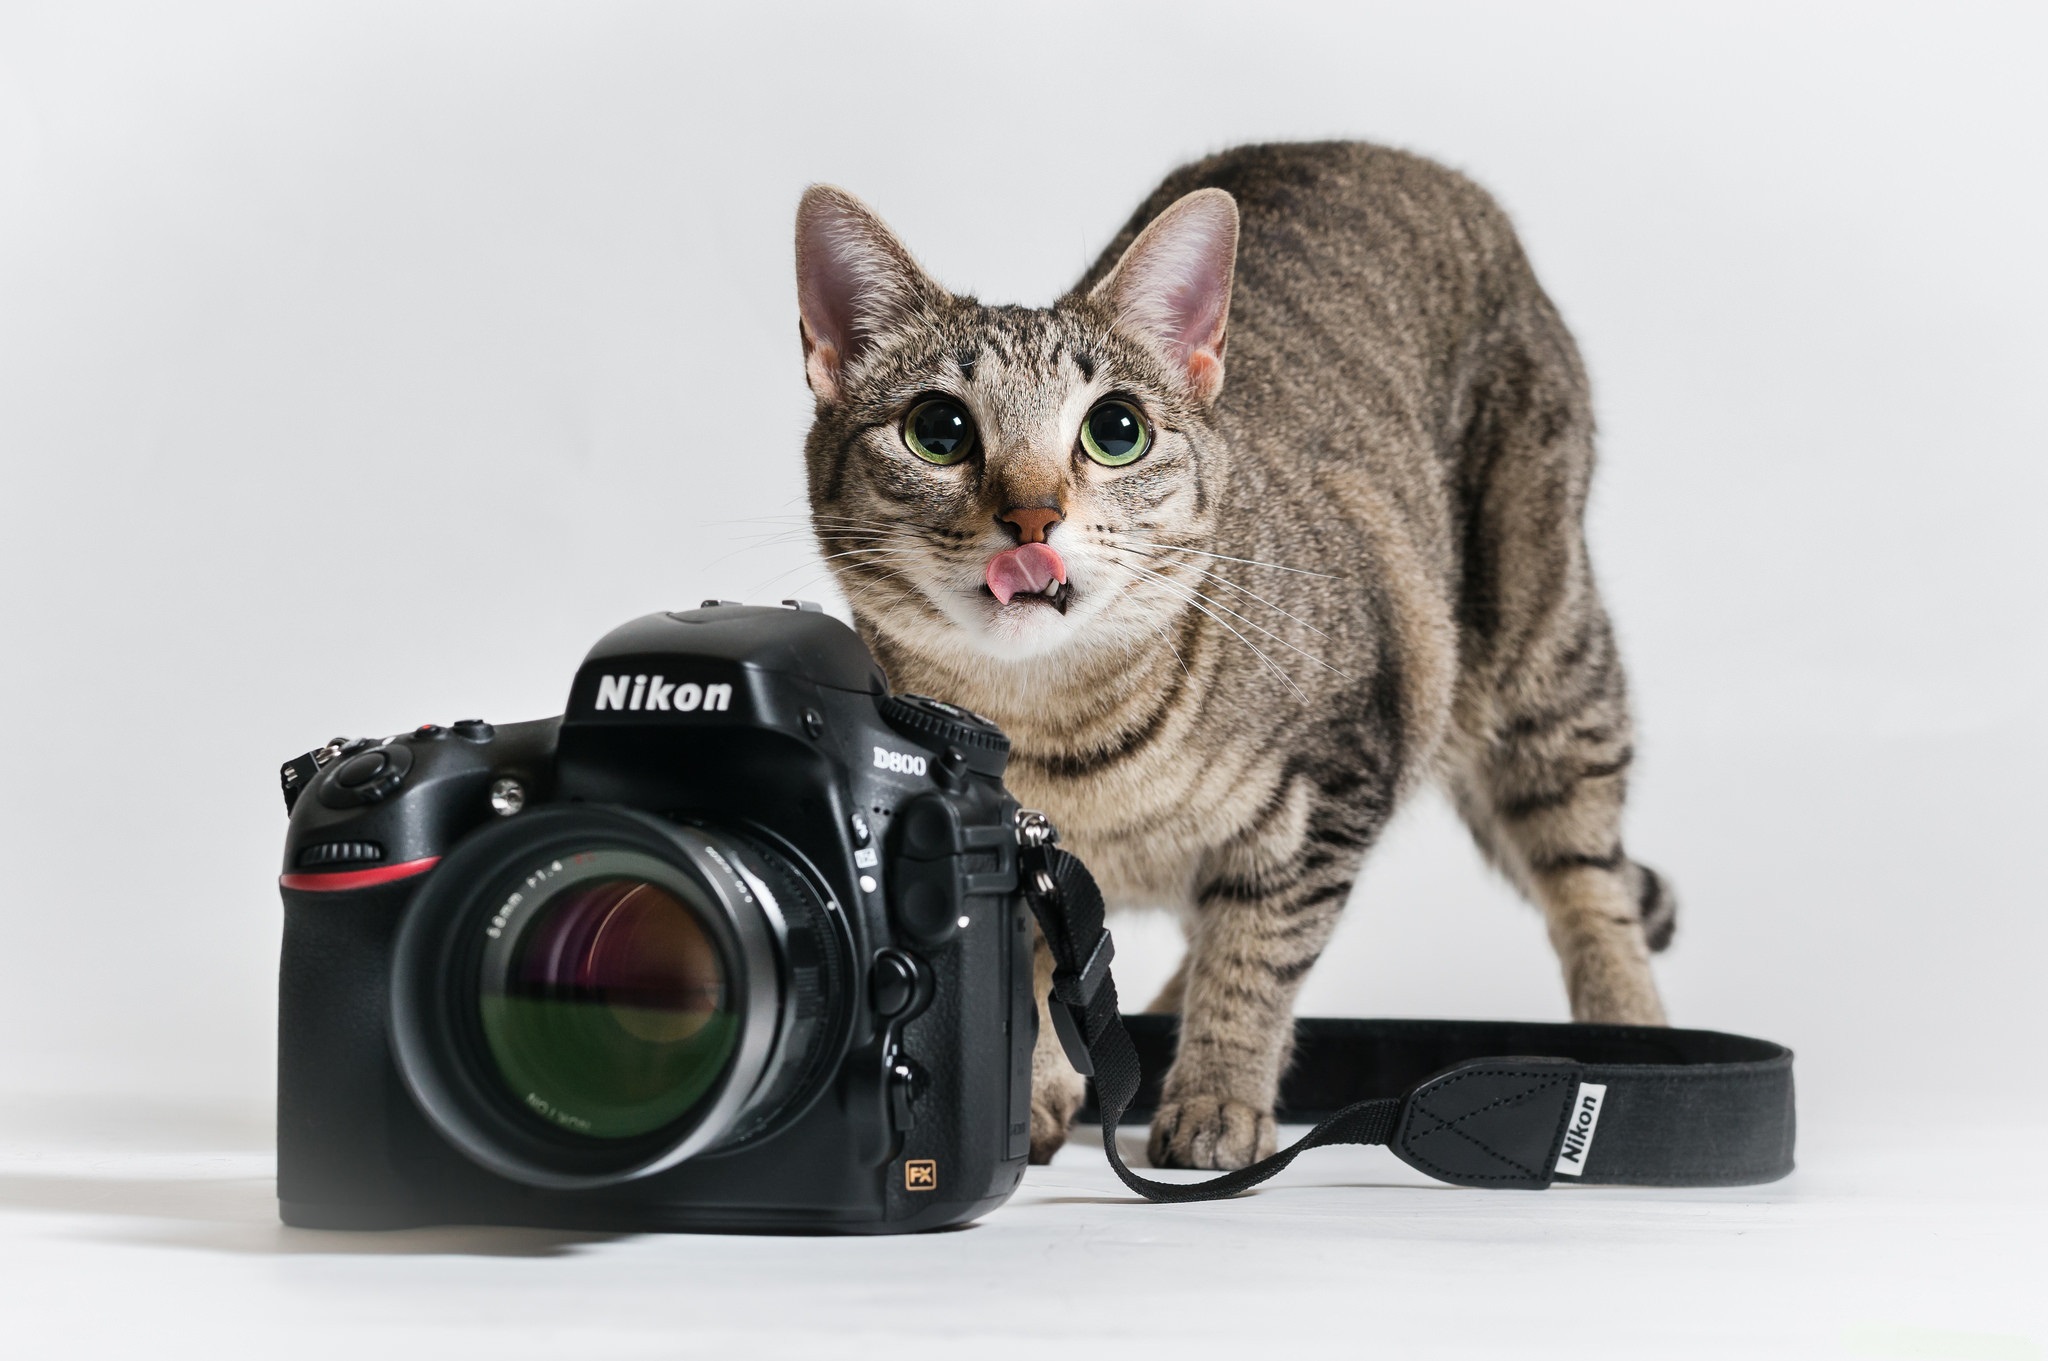 463268 descargar imagen animales, gato, cámara, nikon, gatos: fondos de pantalla y protectores de pantalla gratis